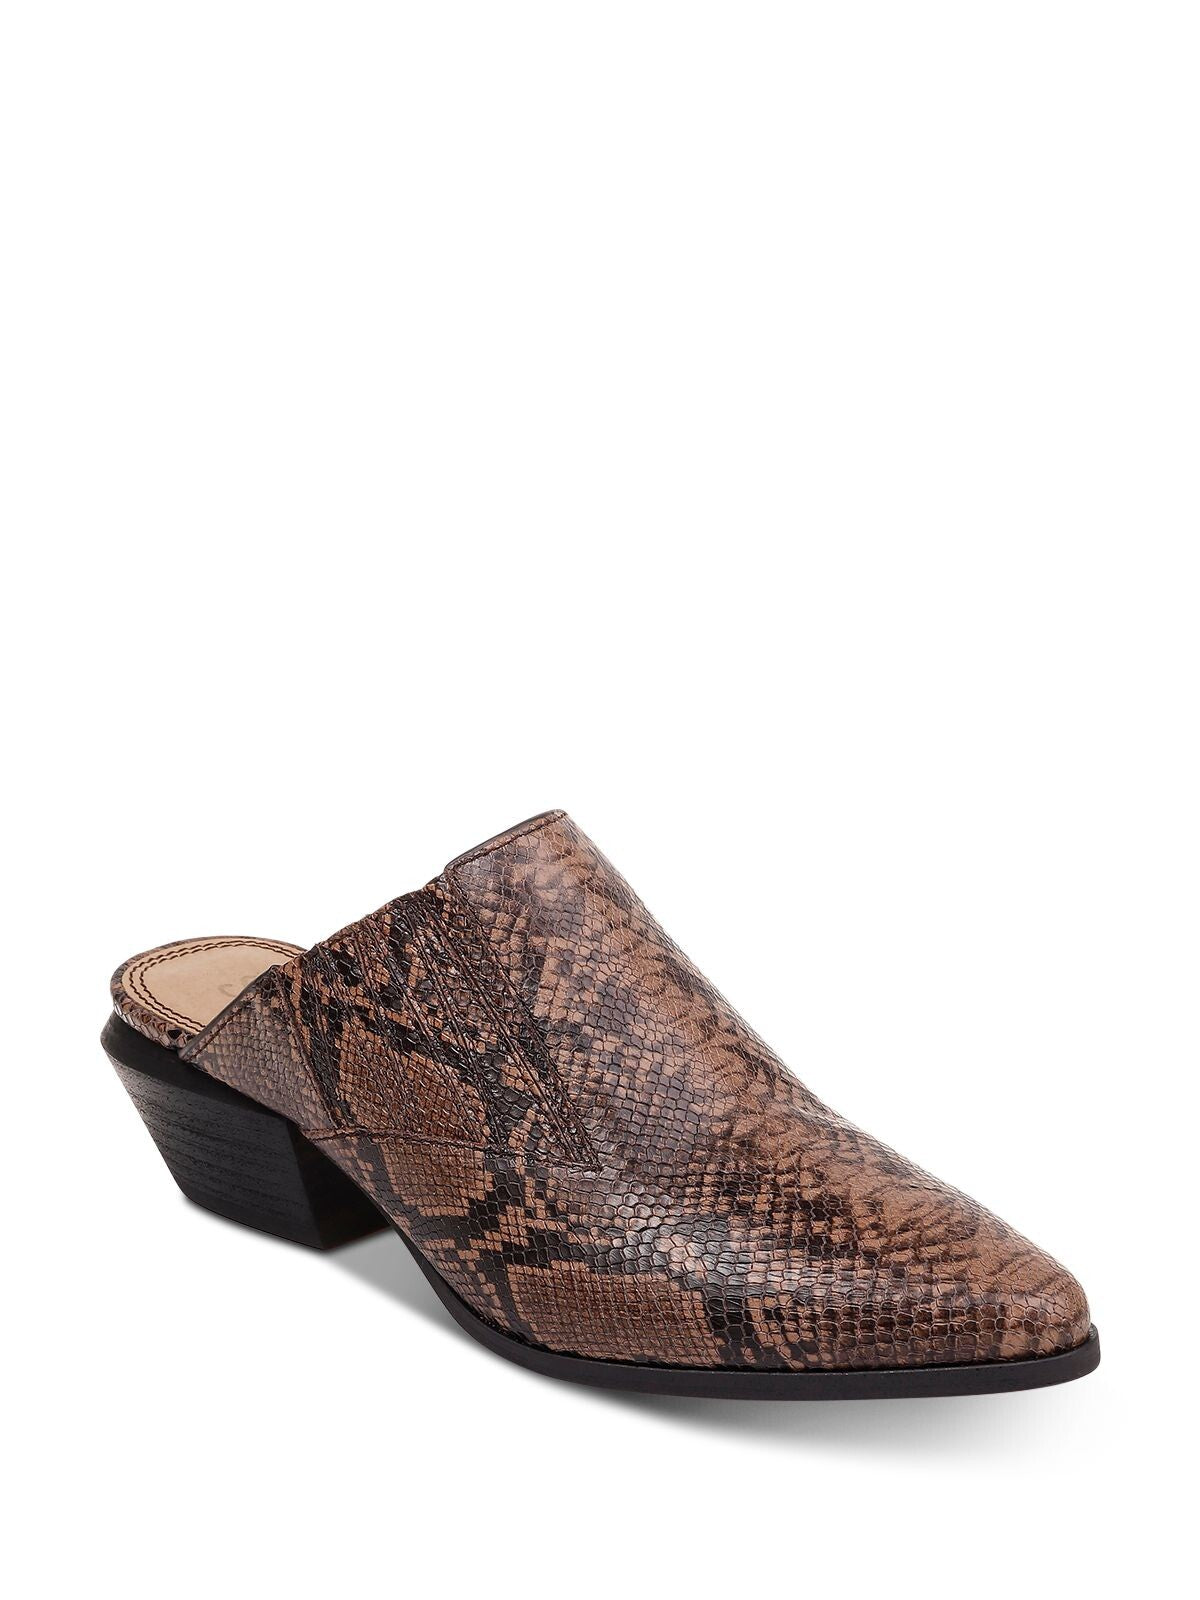 SPLENDID Womens Brown Snakeskin Print Goring Cushioned Hailee 2 Pointed Toe Stacked Heel Slip On Heeled Mules Shoes 7 M